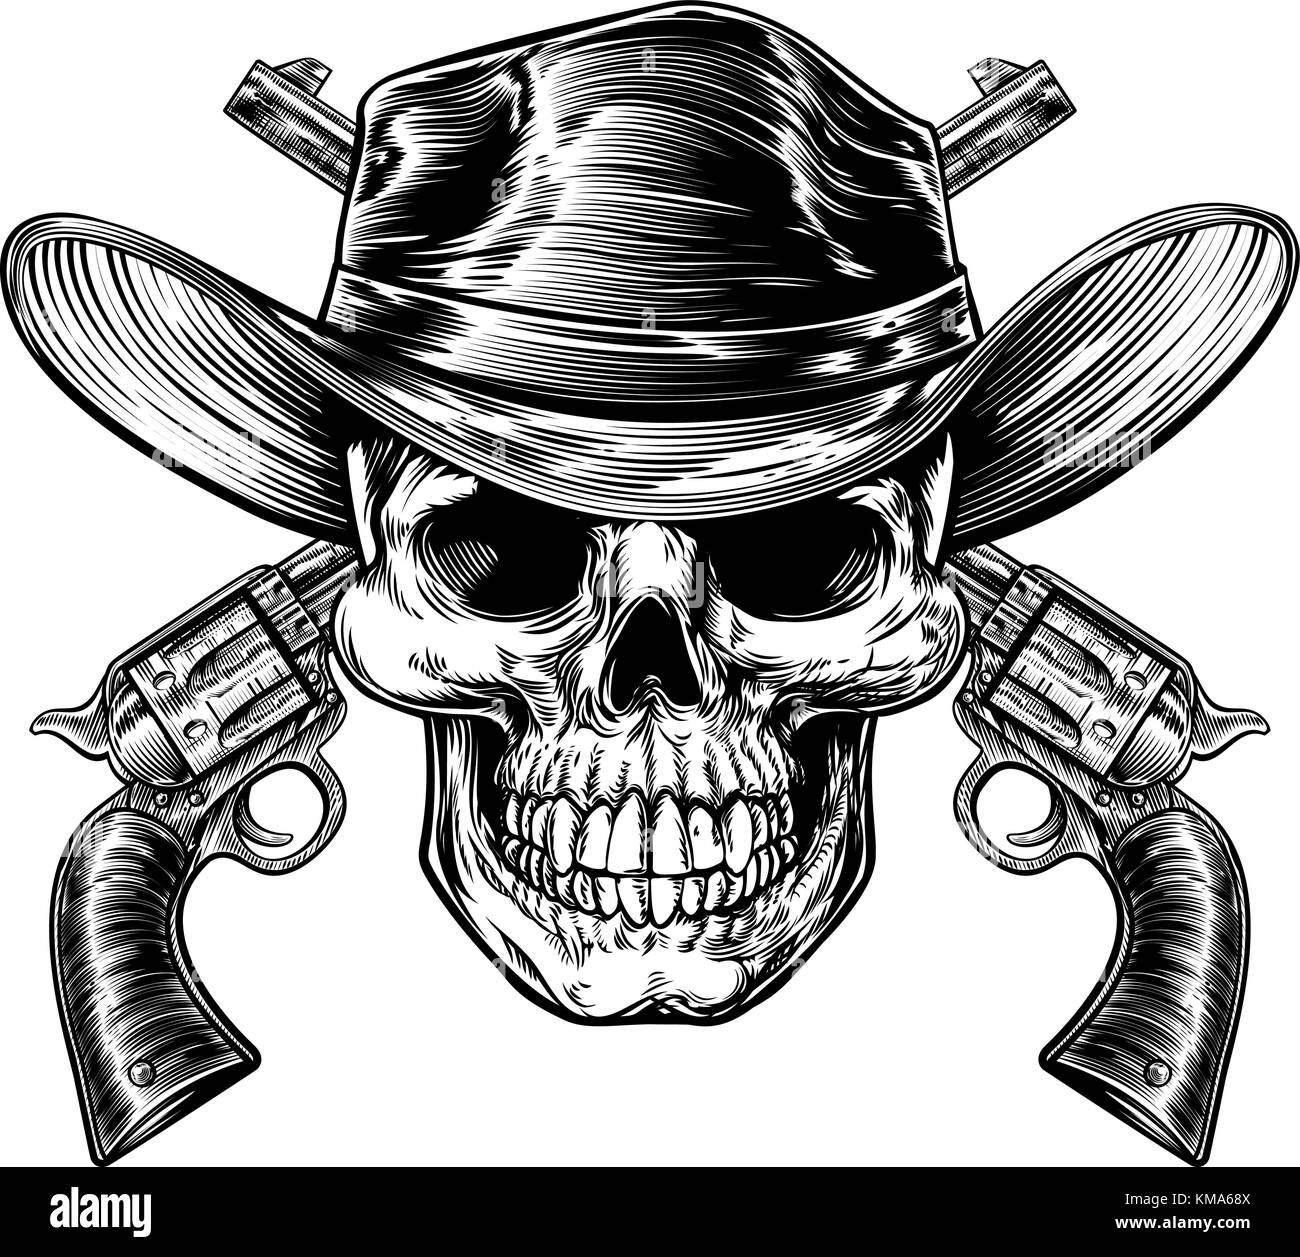 1056 Skull Crossed Guns Tattoo Images Stock Photos  Vectors   Shutterstock